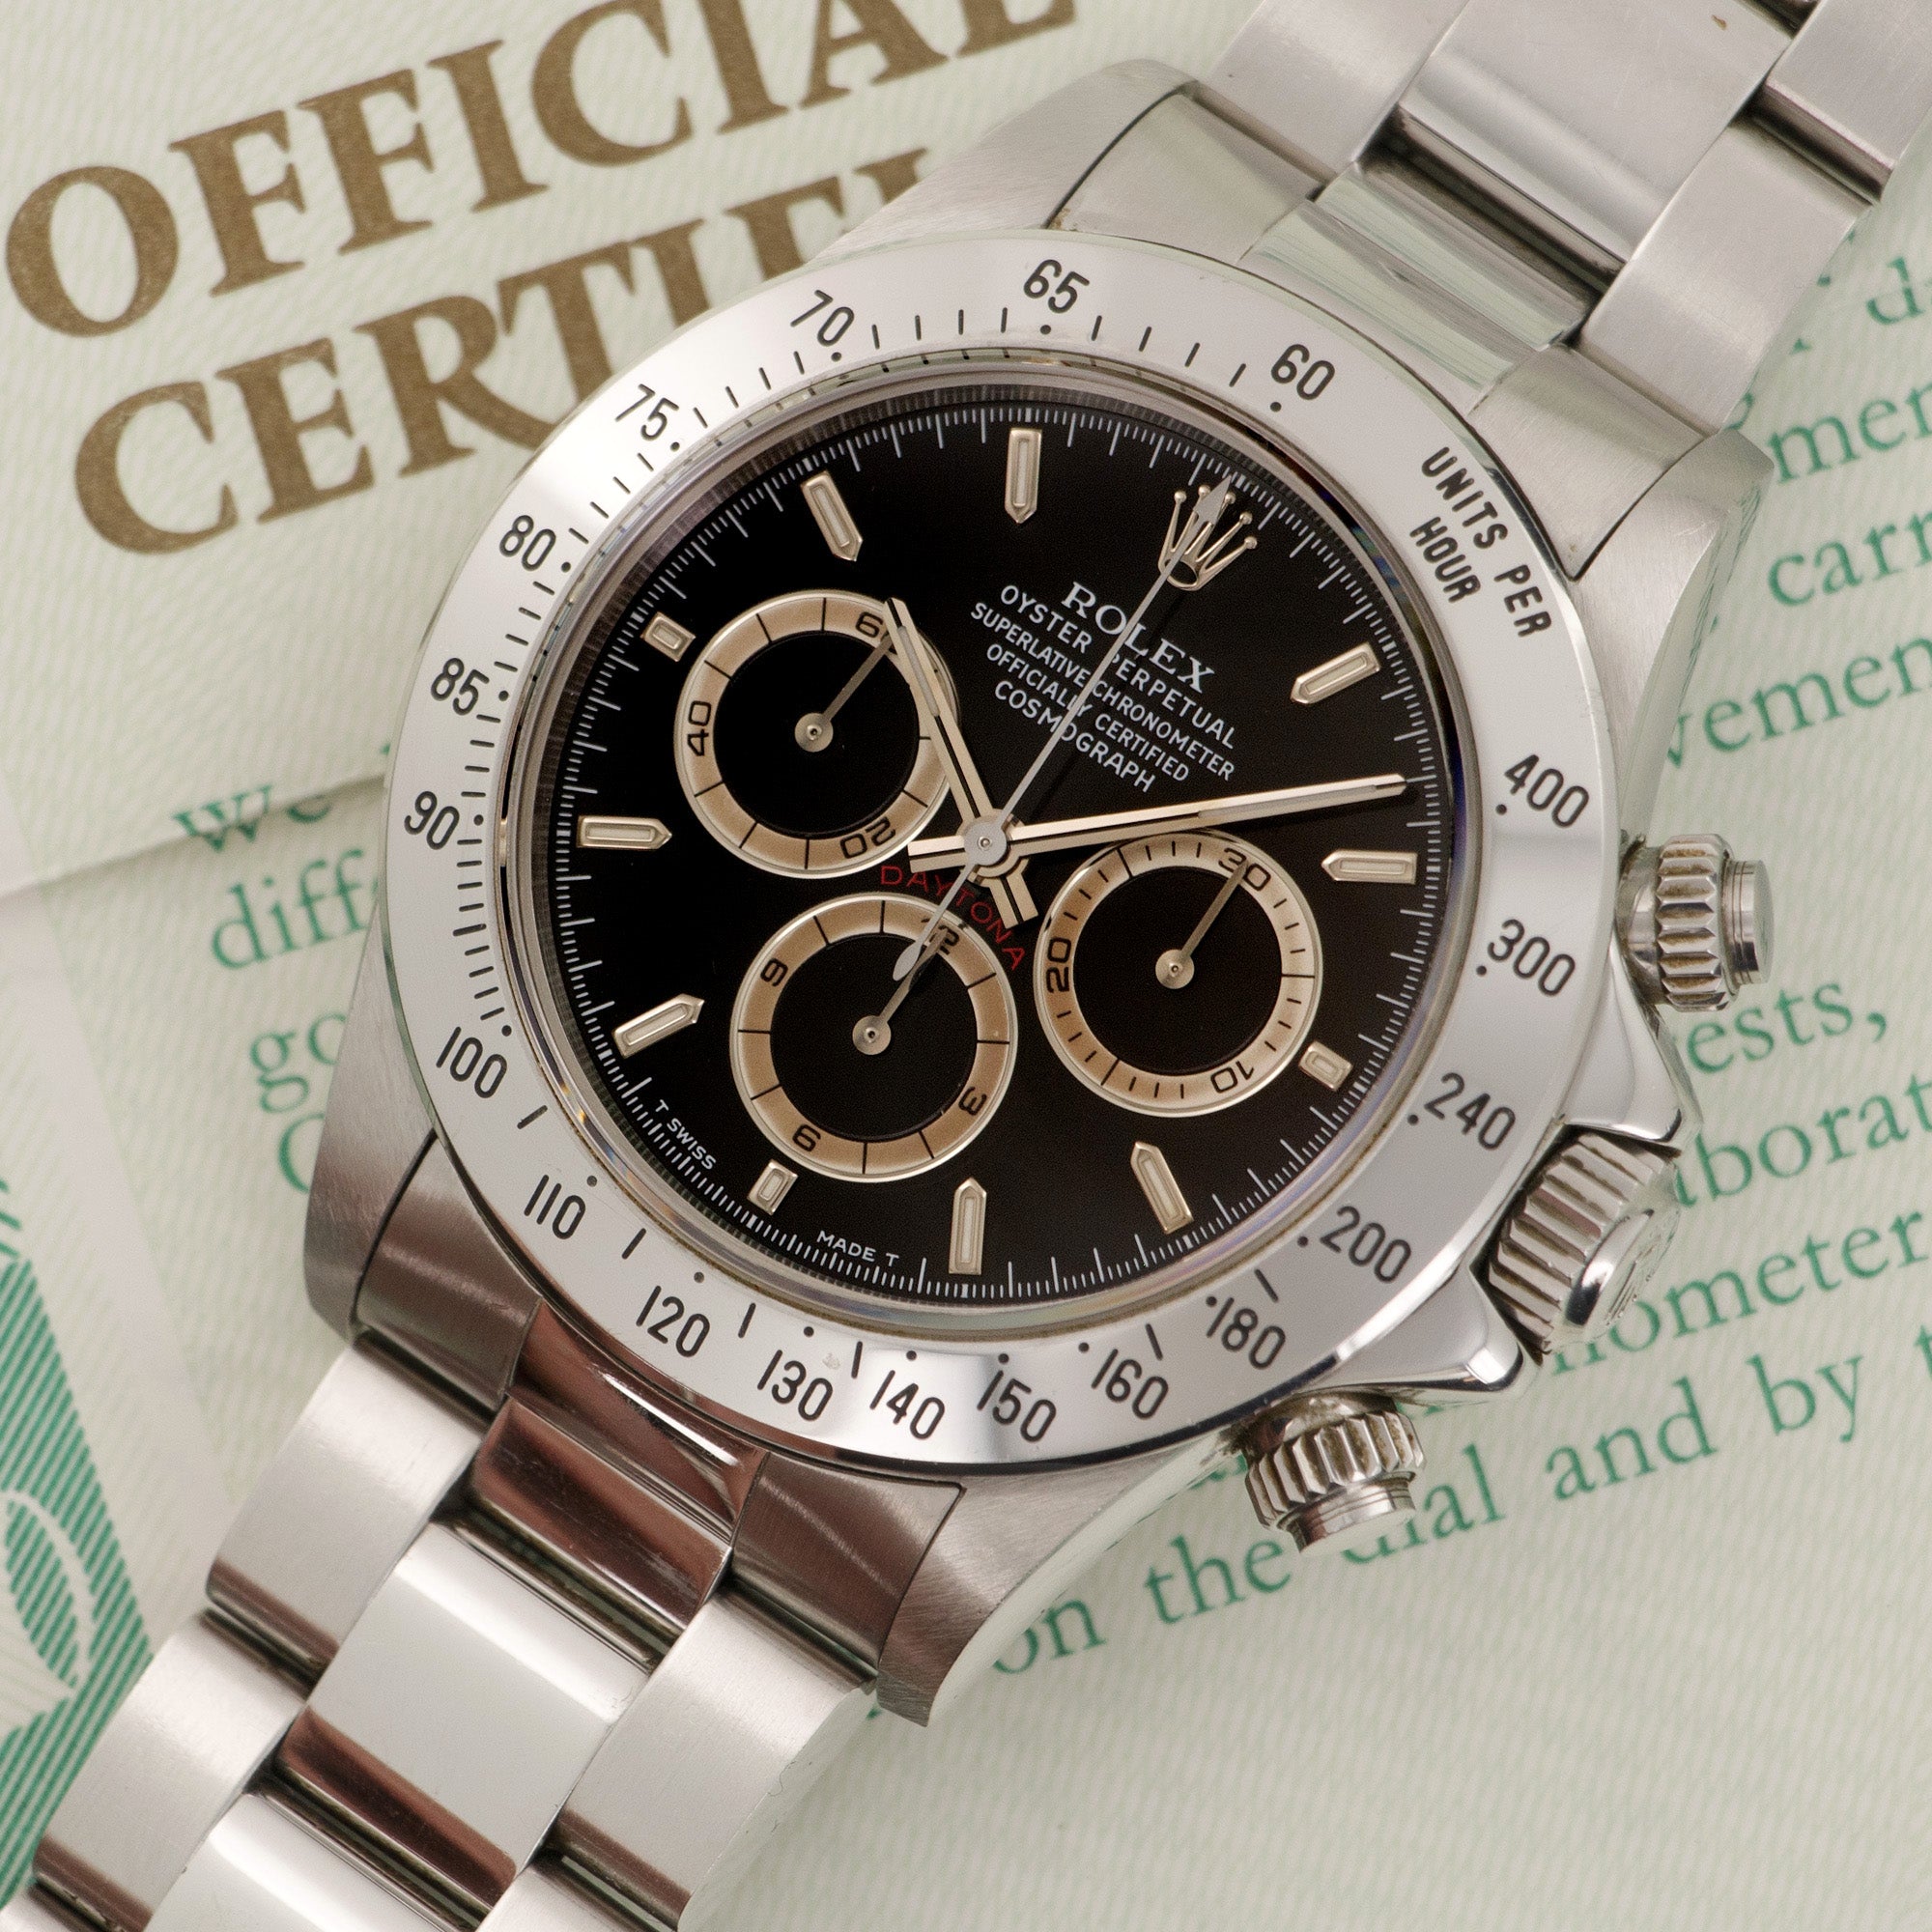 Rolex - Rolex Daytona Cosmograph Patrizzi Watch Ref. 16520 with Original Warranty Paper - The Keystone Watches